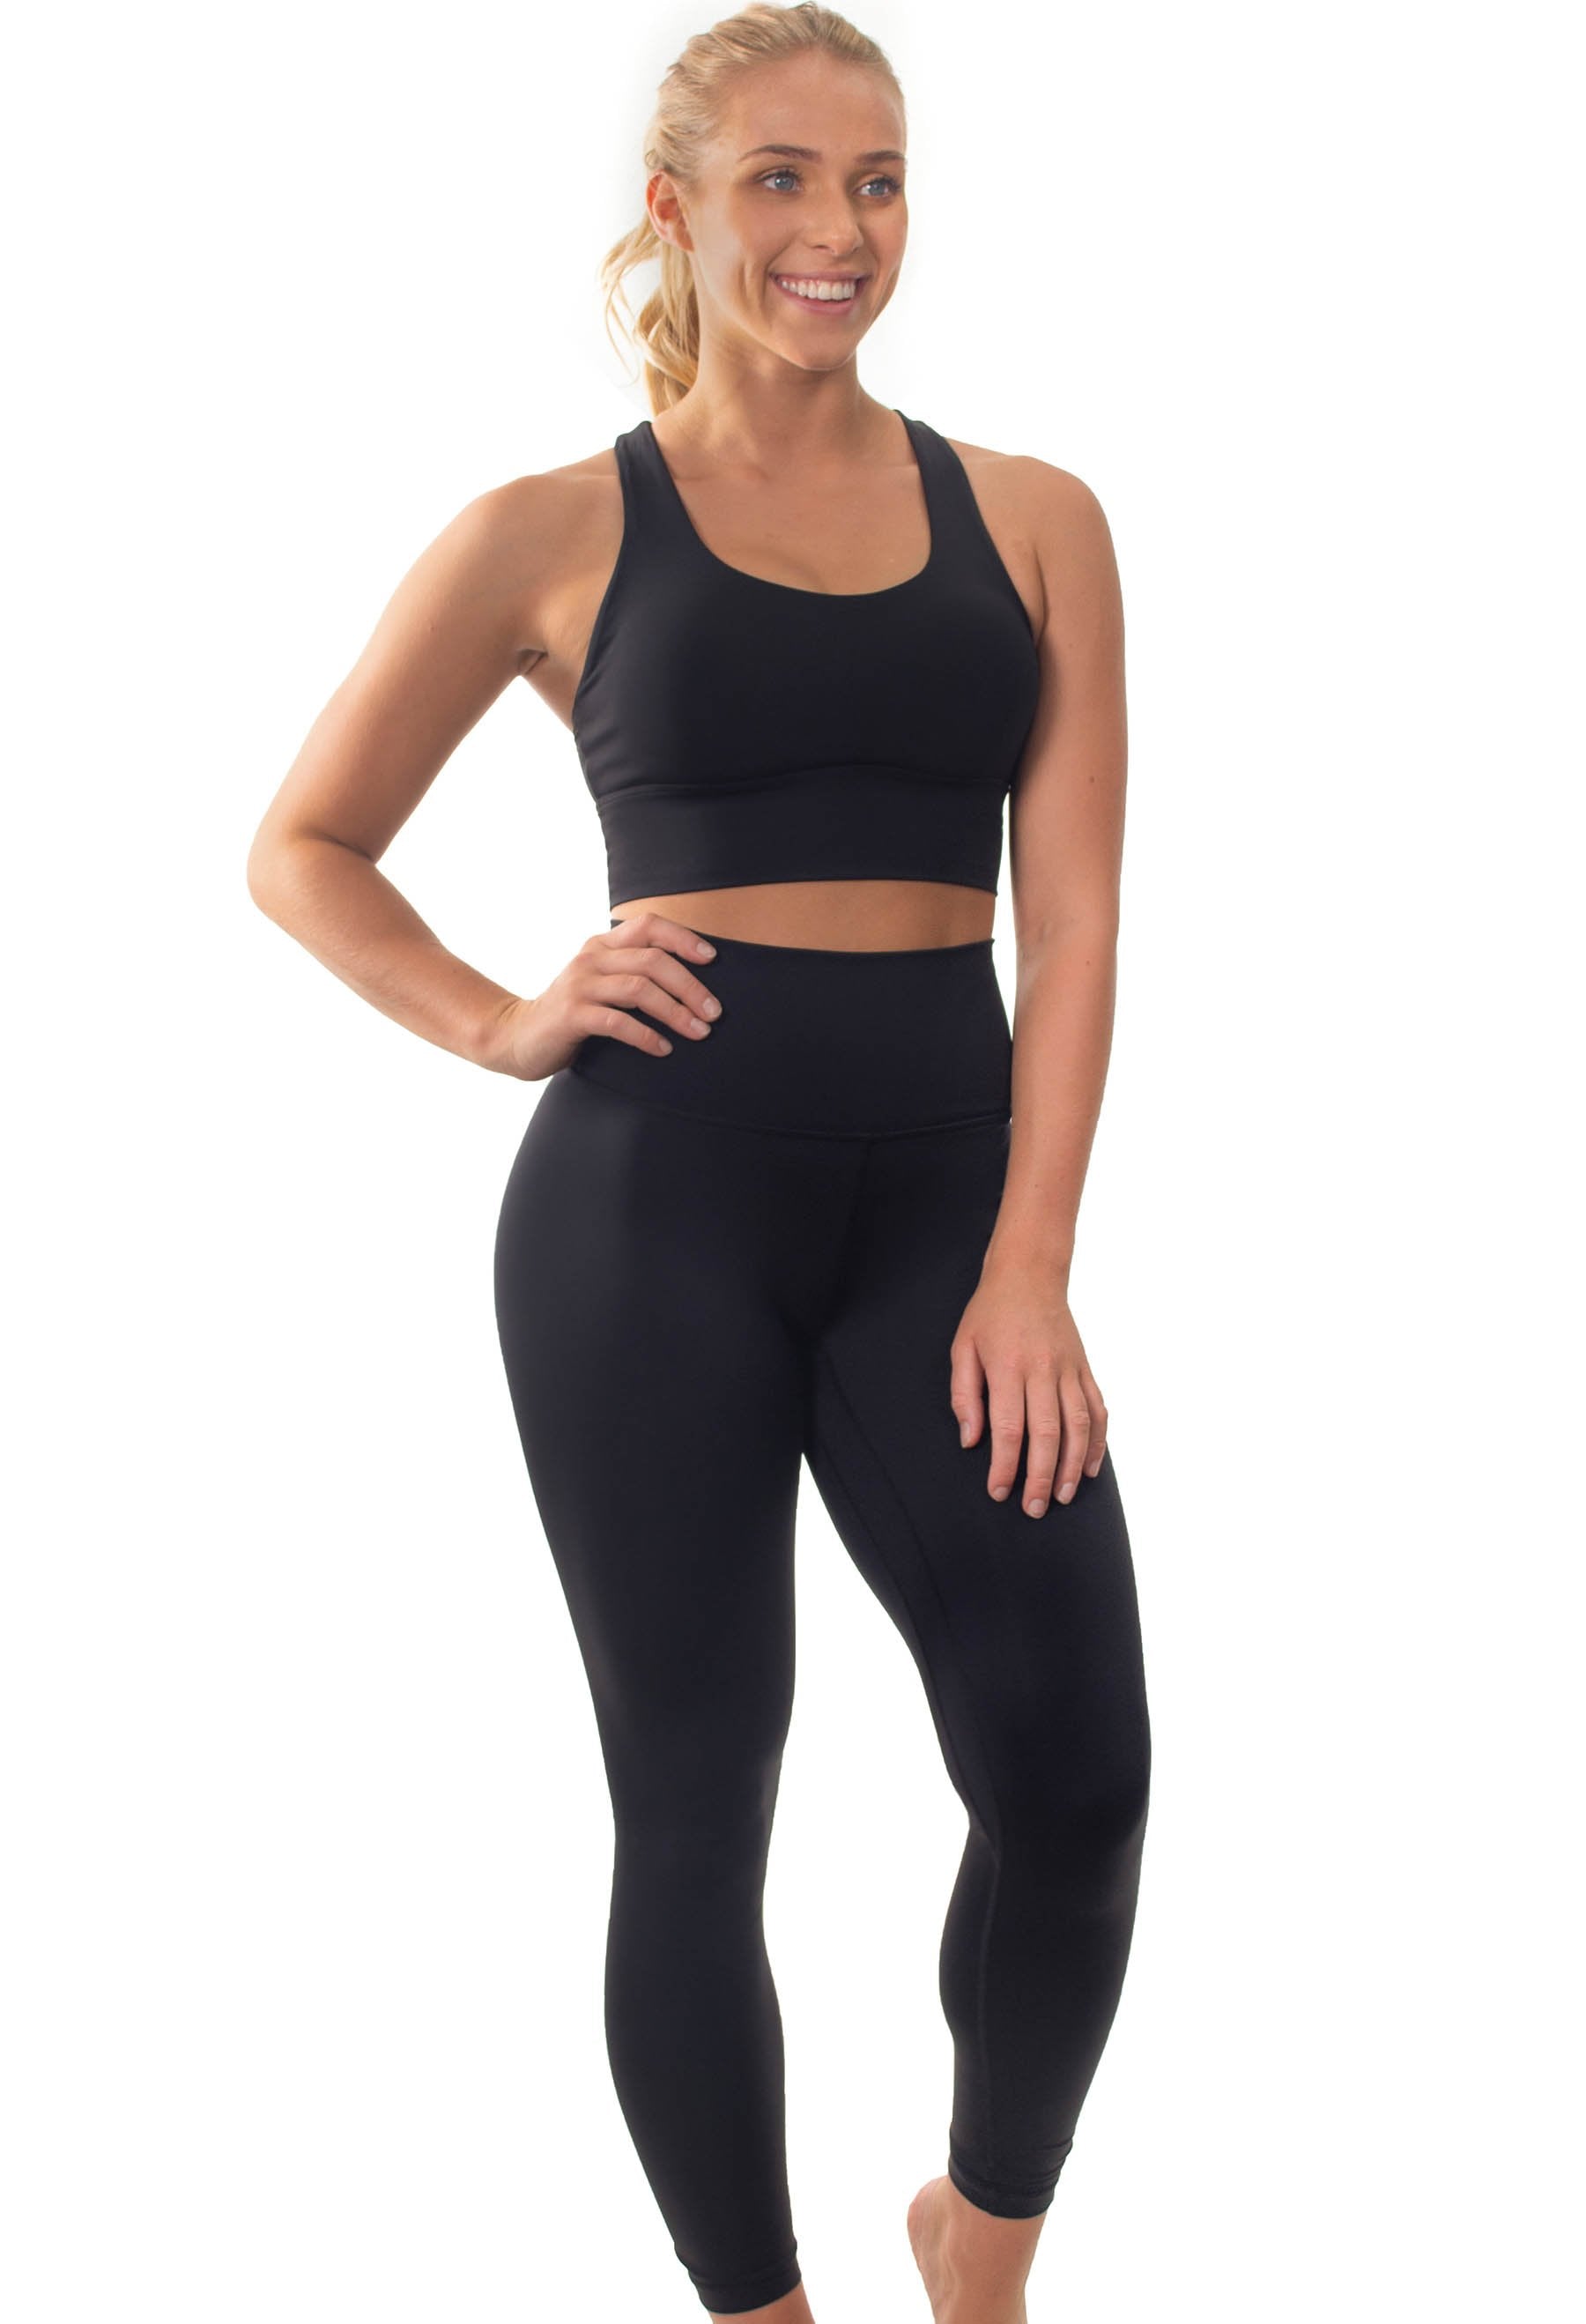 Funbiz Black Leggings for Womens Girls Yoga Pants High Waisted Gym Workout  Leggings - Walmart.com